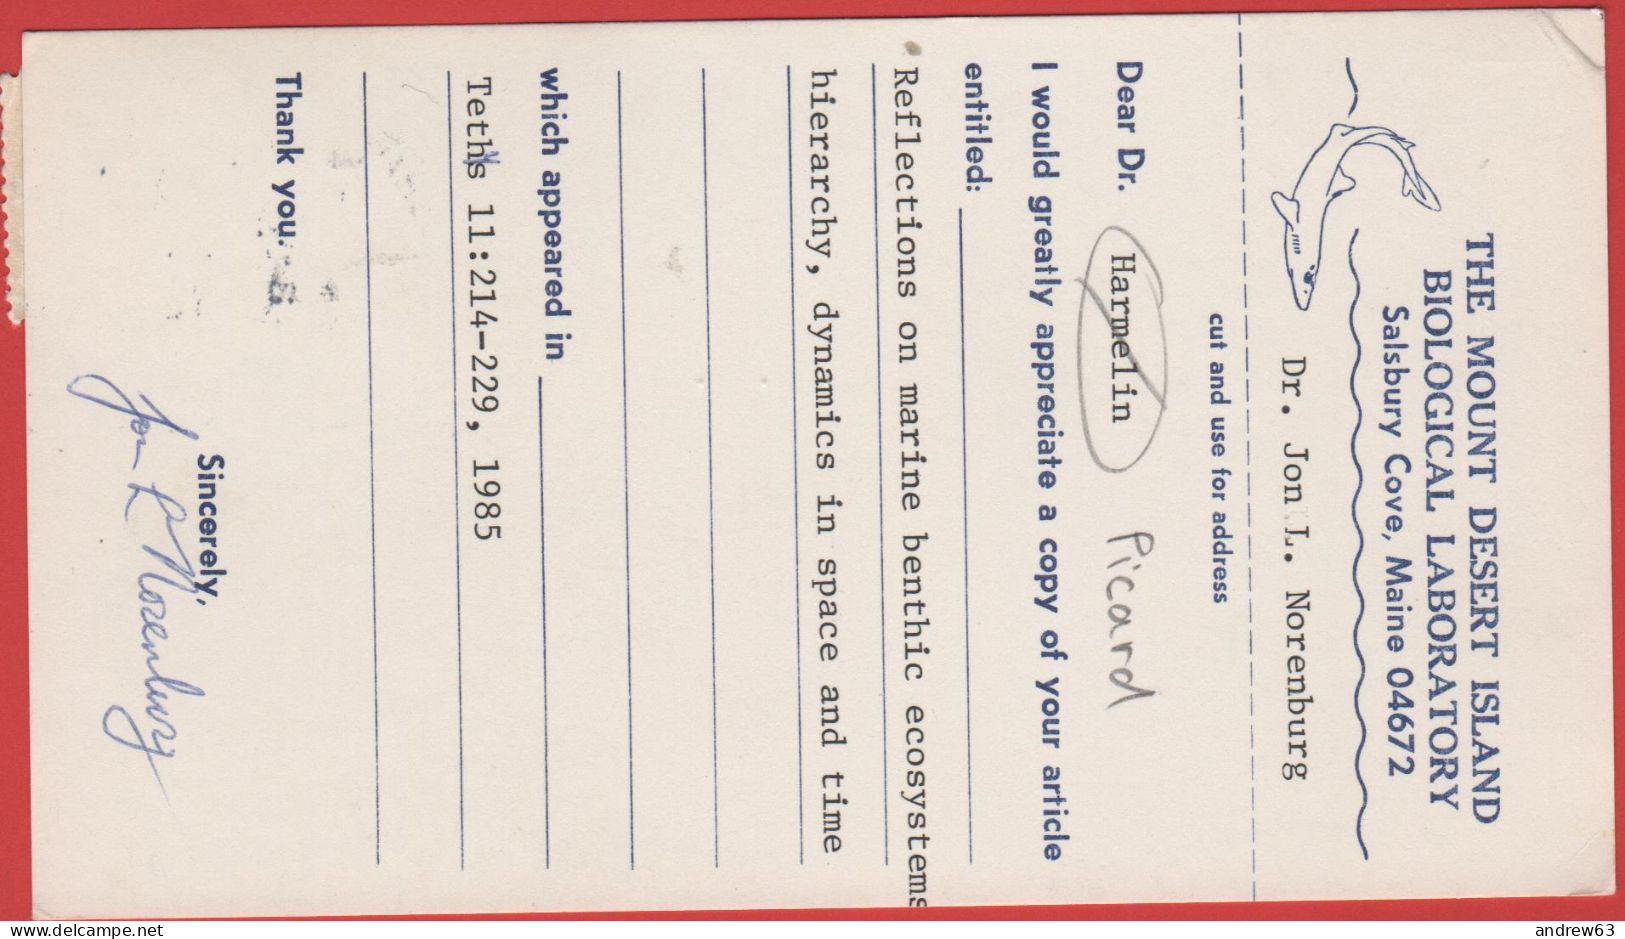 STATI UNITI - UNITED STATES - USA - US - 1986 - 33c Alfred V. Verville Air Mail - Viaggiata Da Salsbury Cove Per Marseil - Briefe U. Dokumente